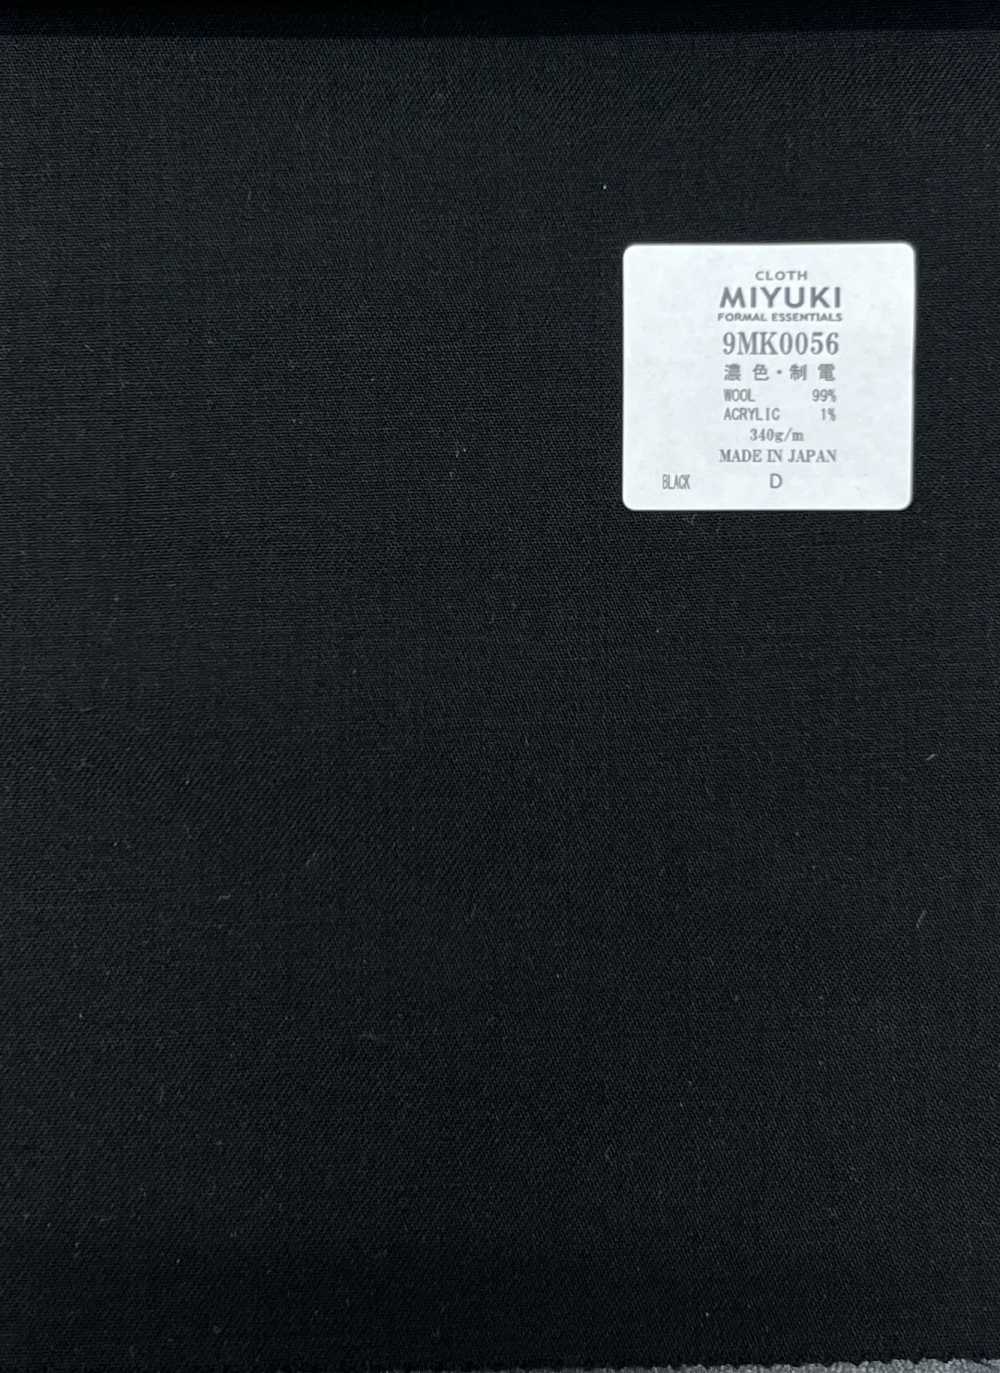 9MK0056 MIYUKI FORMEL[Textile]